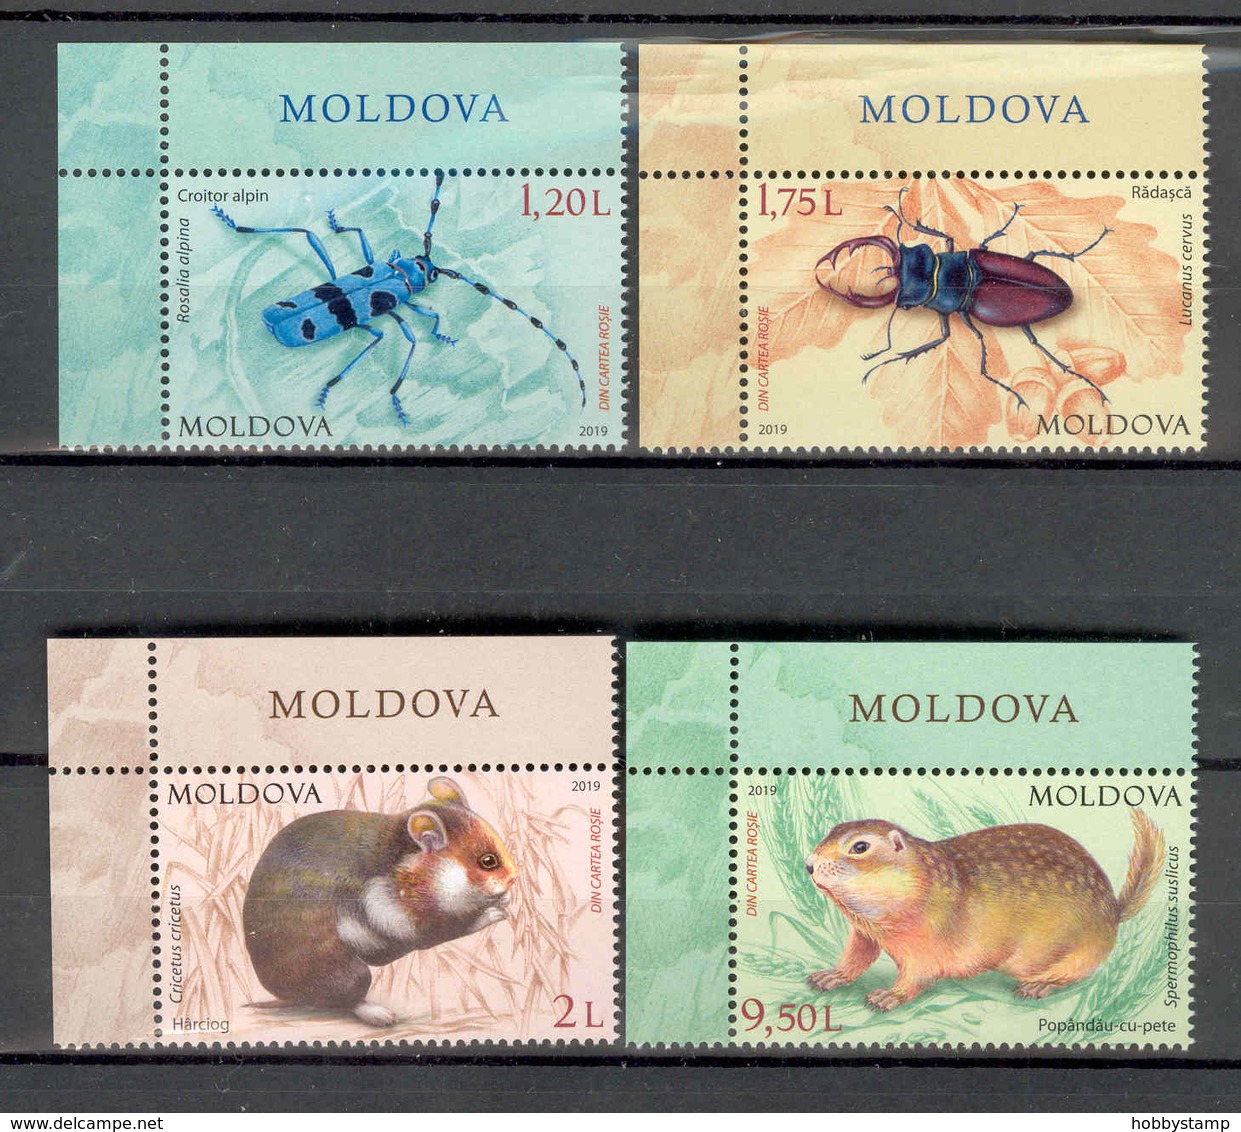 Moldova 2019 Red Book Of Moldova Beetles Insects Rodents Set Of 4v** MNH - Moldavia